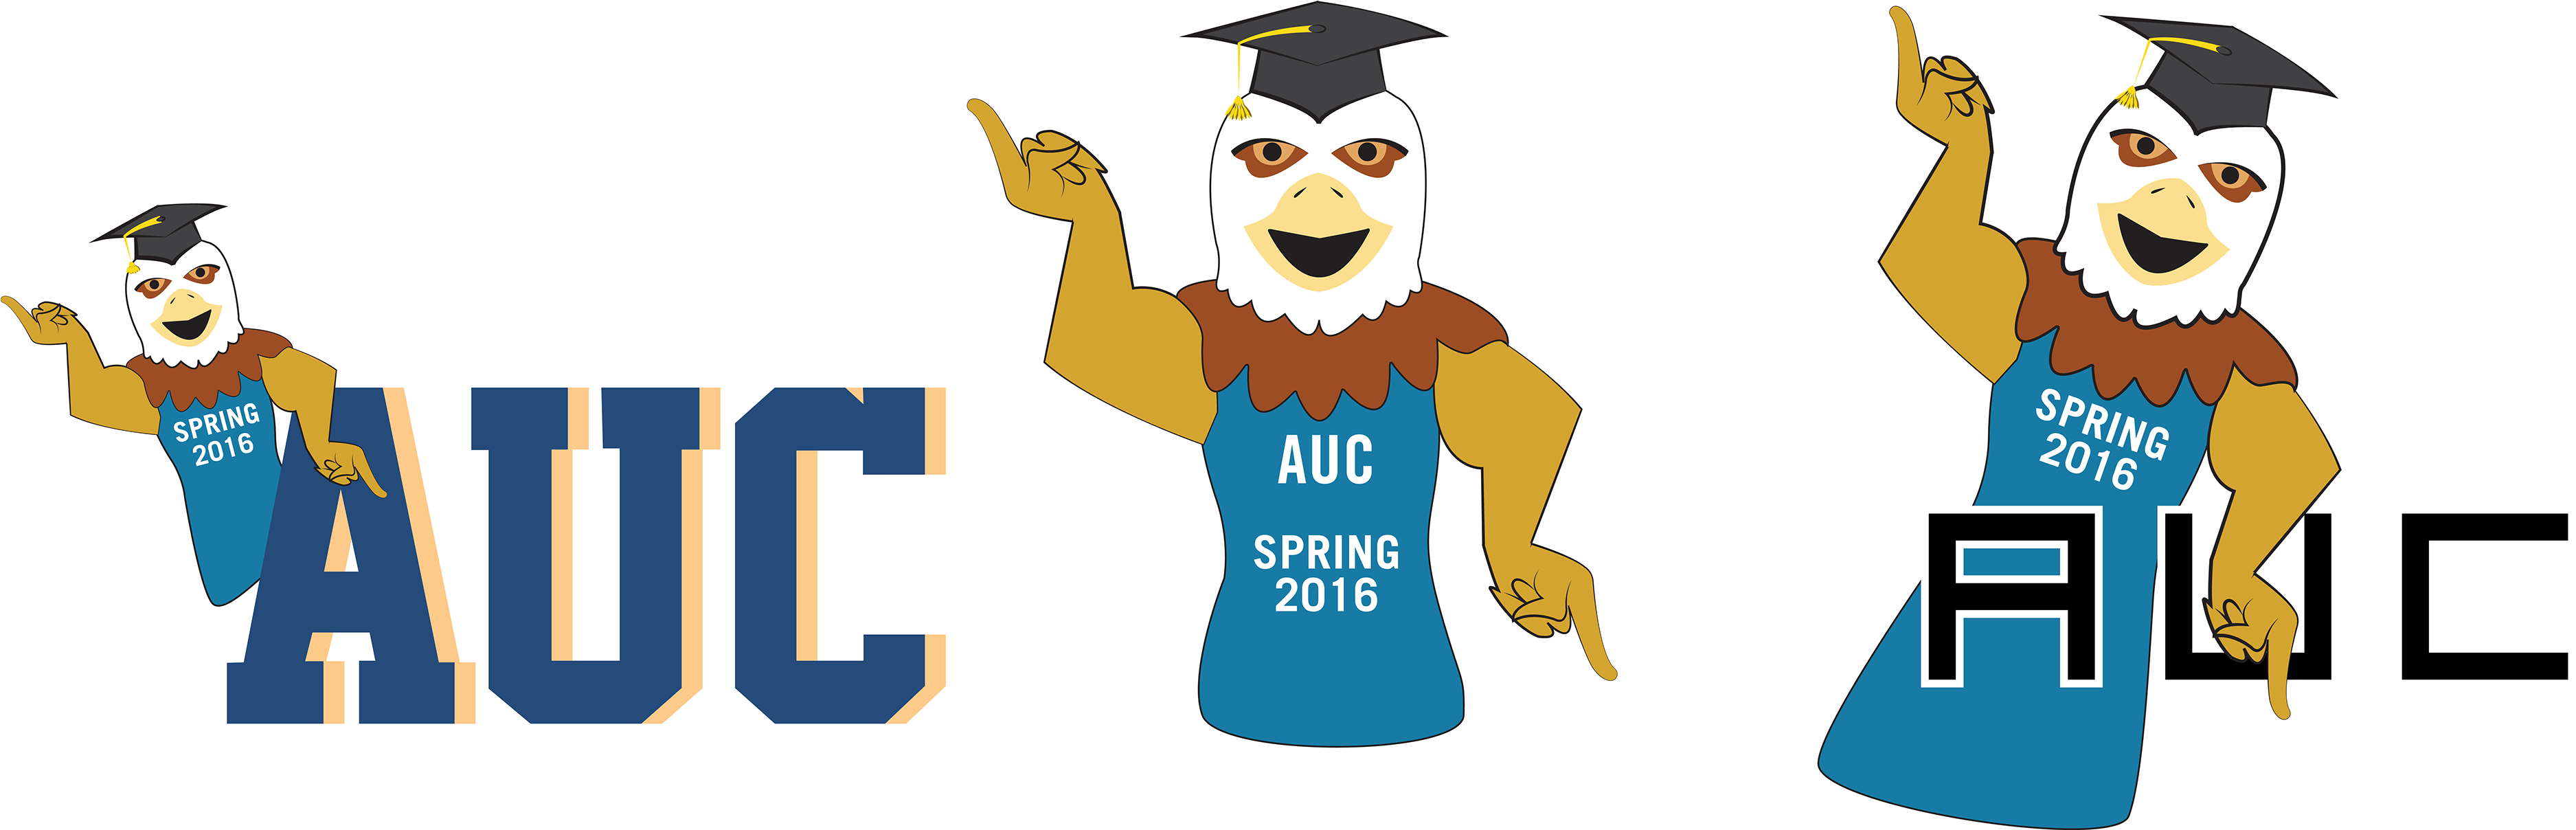 Auc Spring 2016 Graduation Snapchat Filters - Graduation (3840x1207)